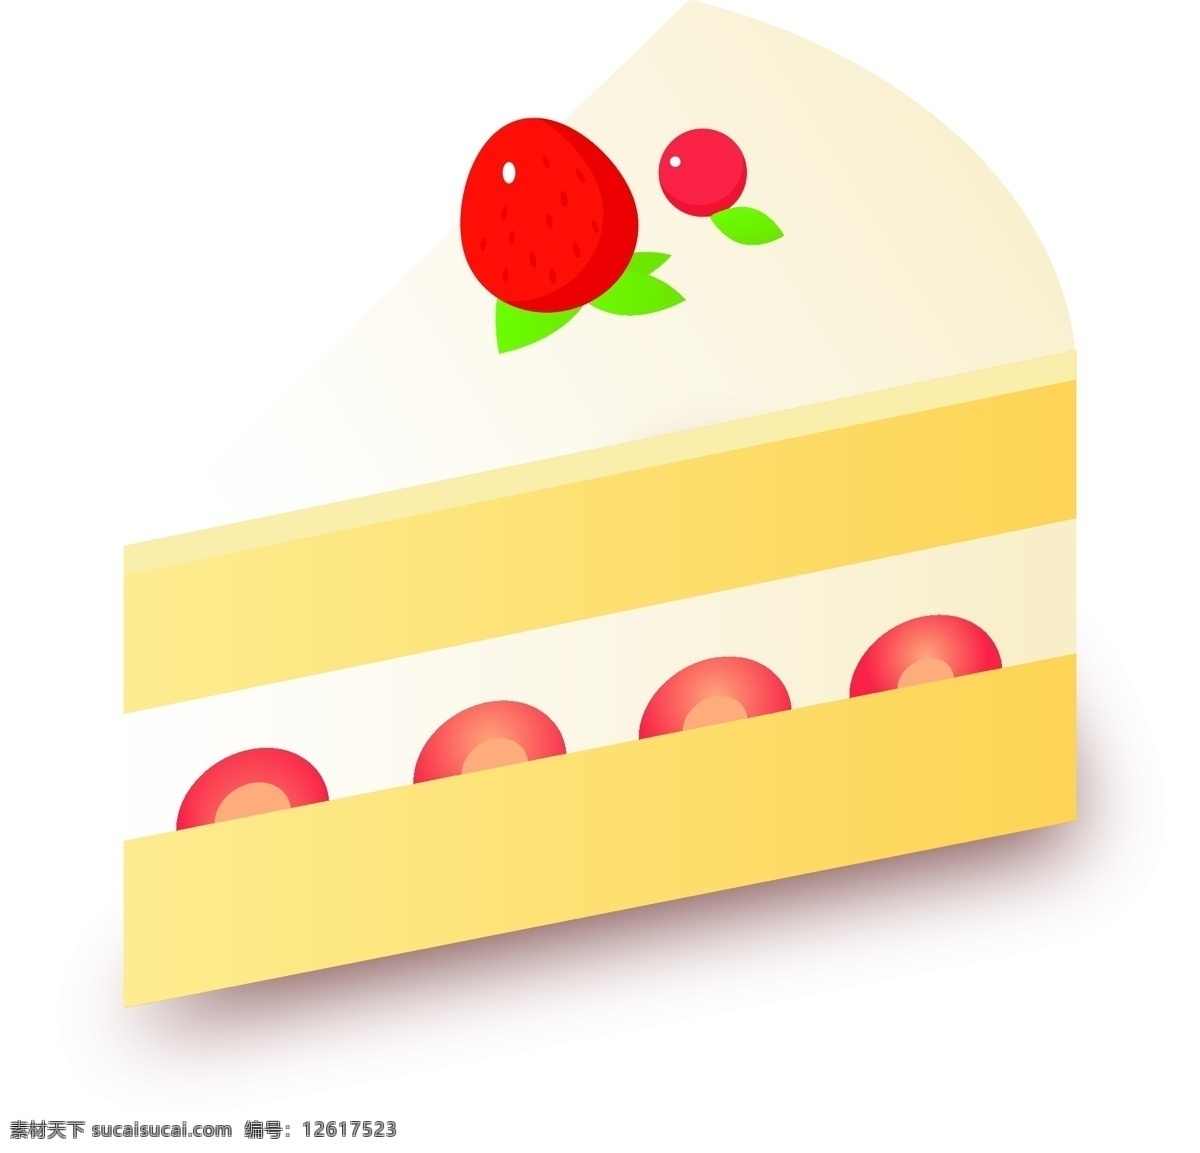 d 轴 测 图 奶油 草莓 蛋糕 矢量 设计素材 甜品 甜点 樱桃 2.5d奶油 甜食